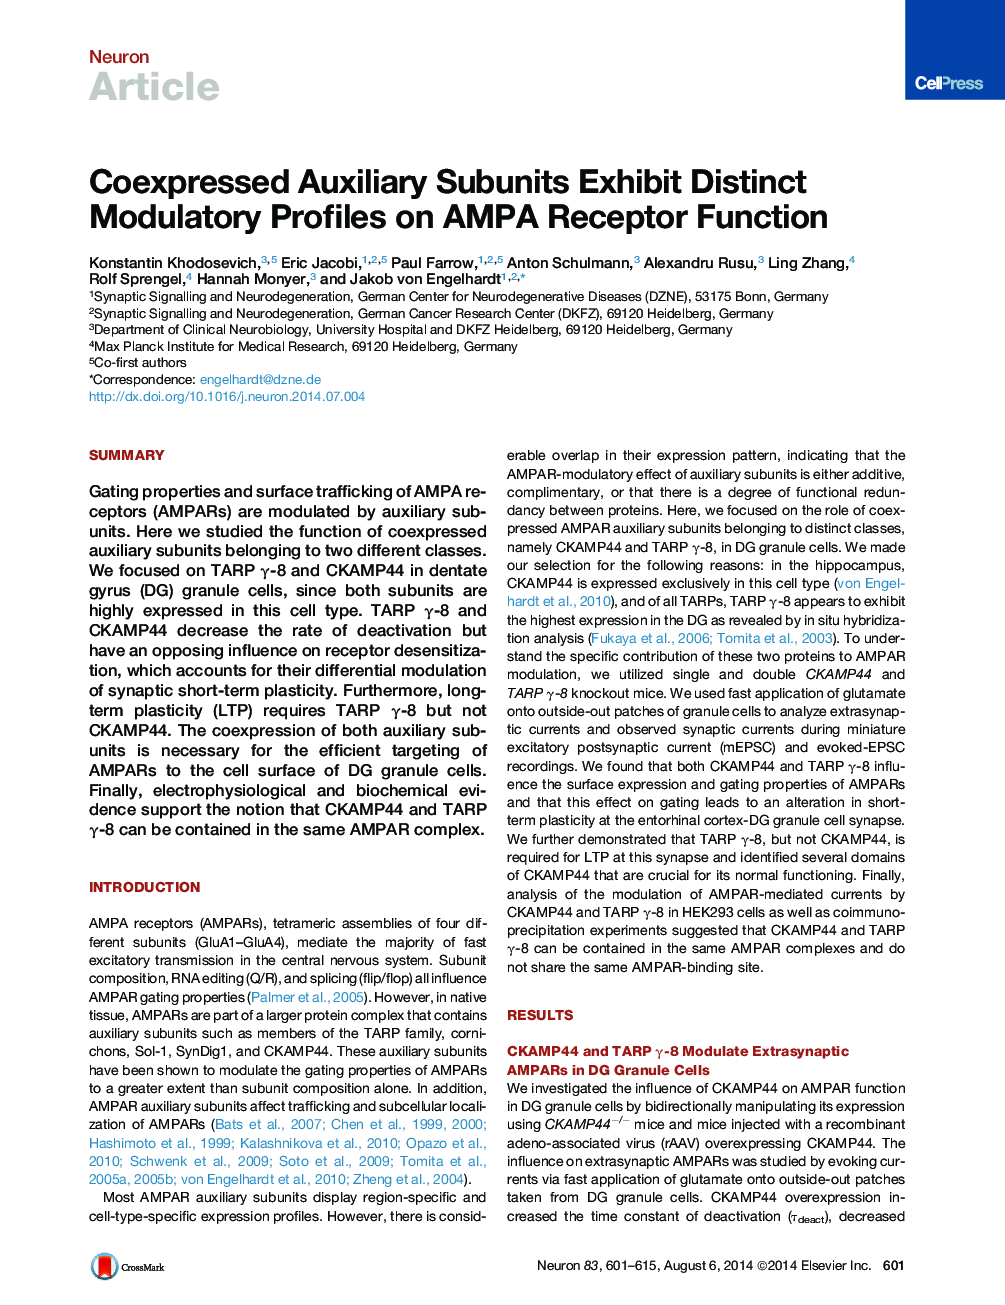 Coexpressed Auxiliary Subunits Exhibit Distinct Modulatory Profiles on AMPA Receptor Function